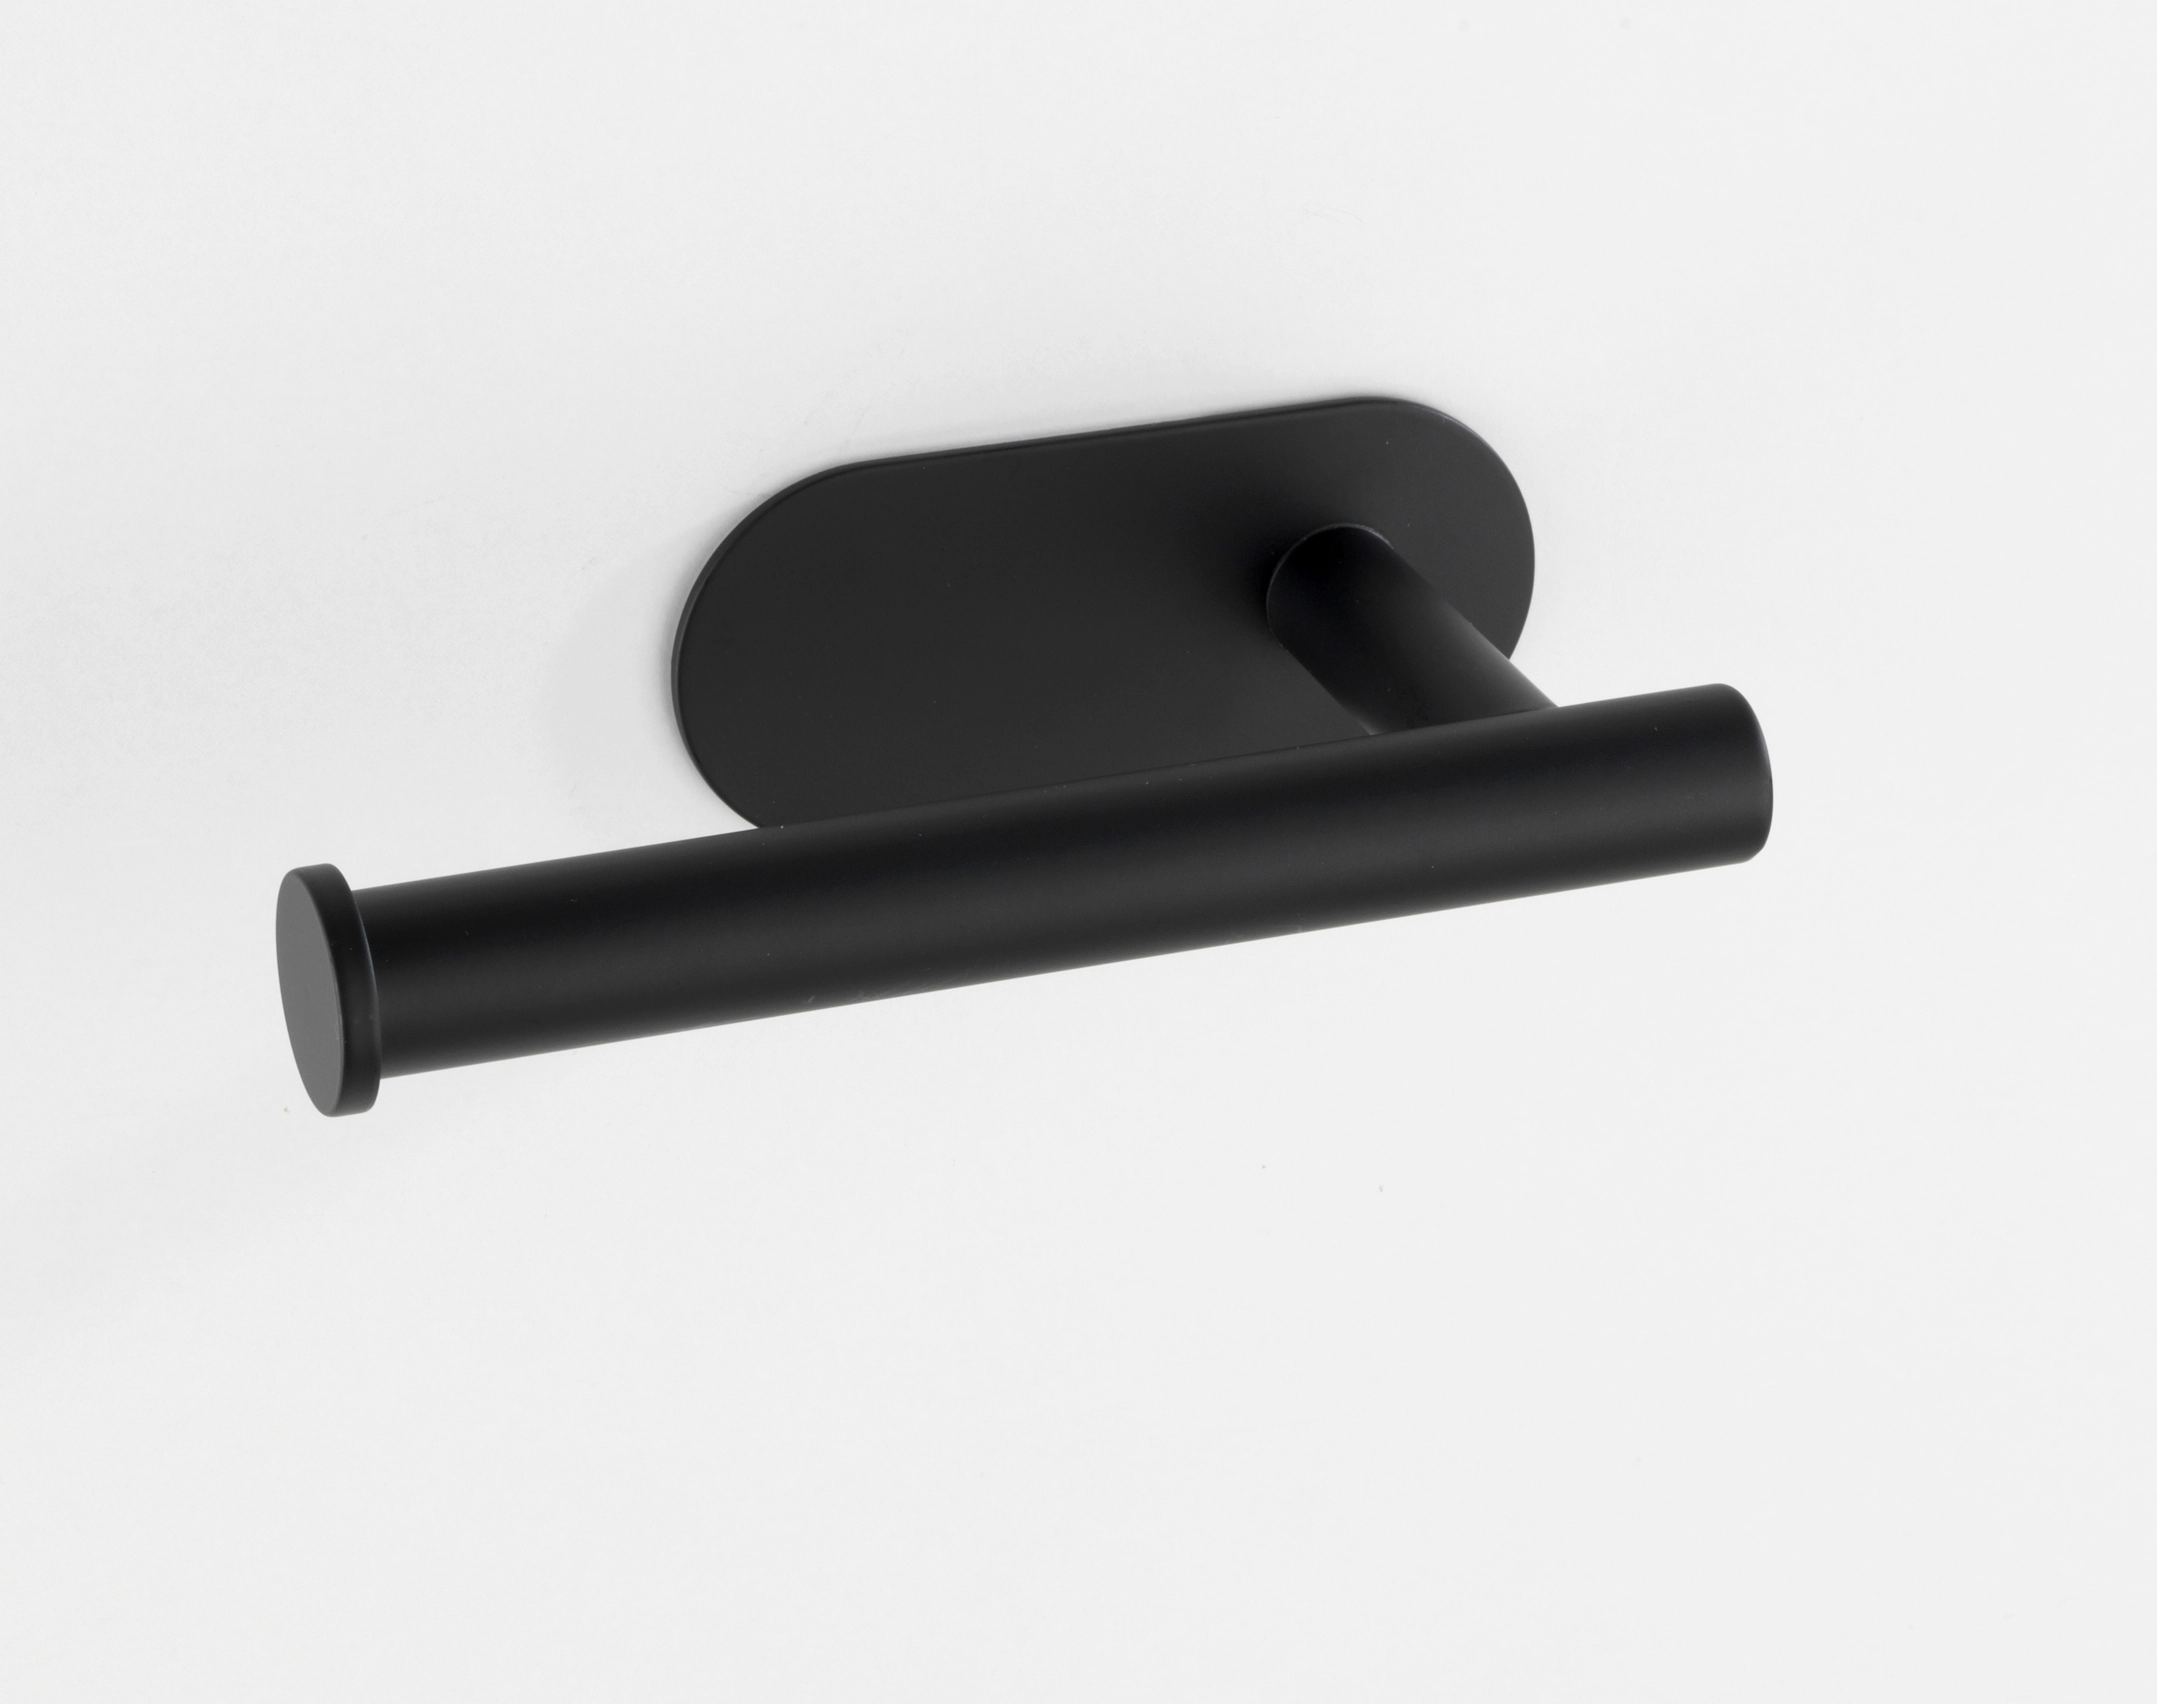 Orea Turbo-Loc Black cm Edelstahl x 7 Wenko Matt 4.5 Toilettenpapierhalter kaufen bei OBI x 16